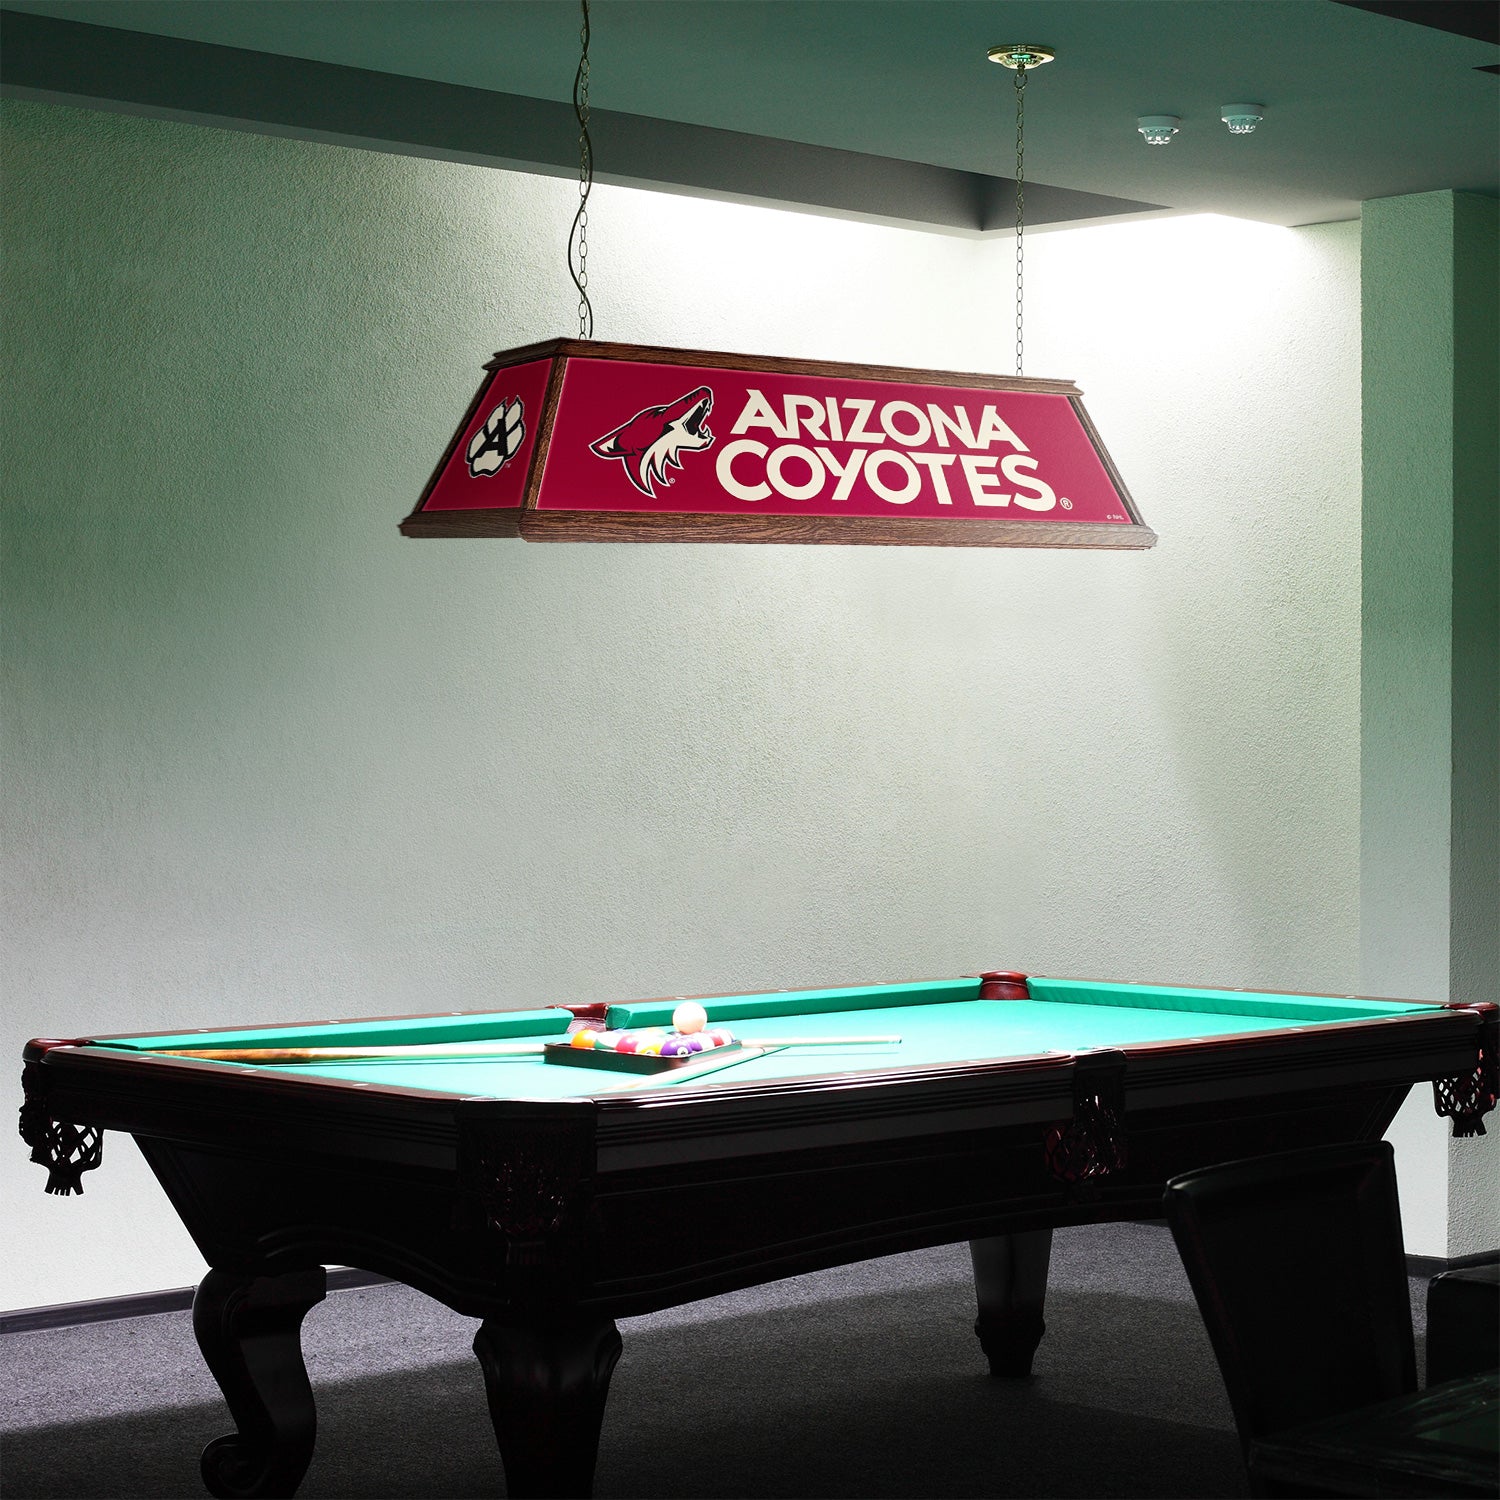 Arizona Coyotes Premium Pool Table Light Room View